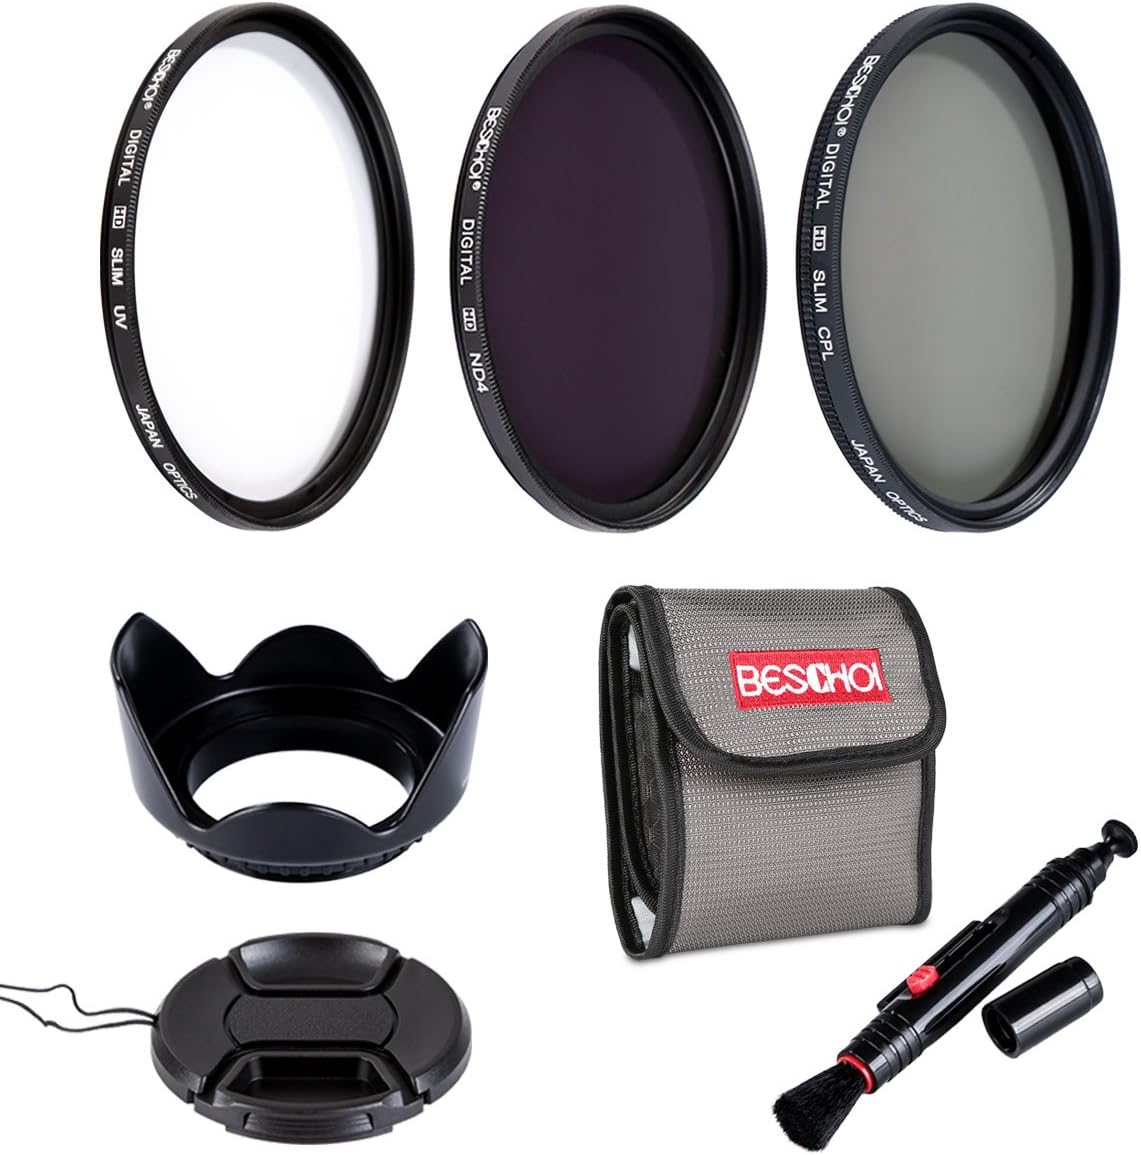 Beschoi 58mm High-Precision Lens Filter Kit (UV CPL ND4) Professional Filter + Petal Lens Hood + Cleaning Pen + Filter Pouch Bag for SLR/DSLR Camera